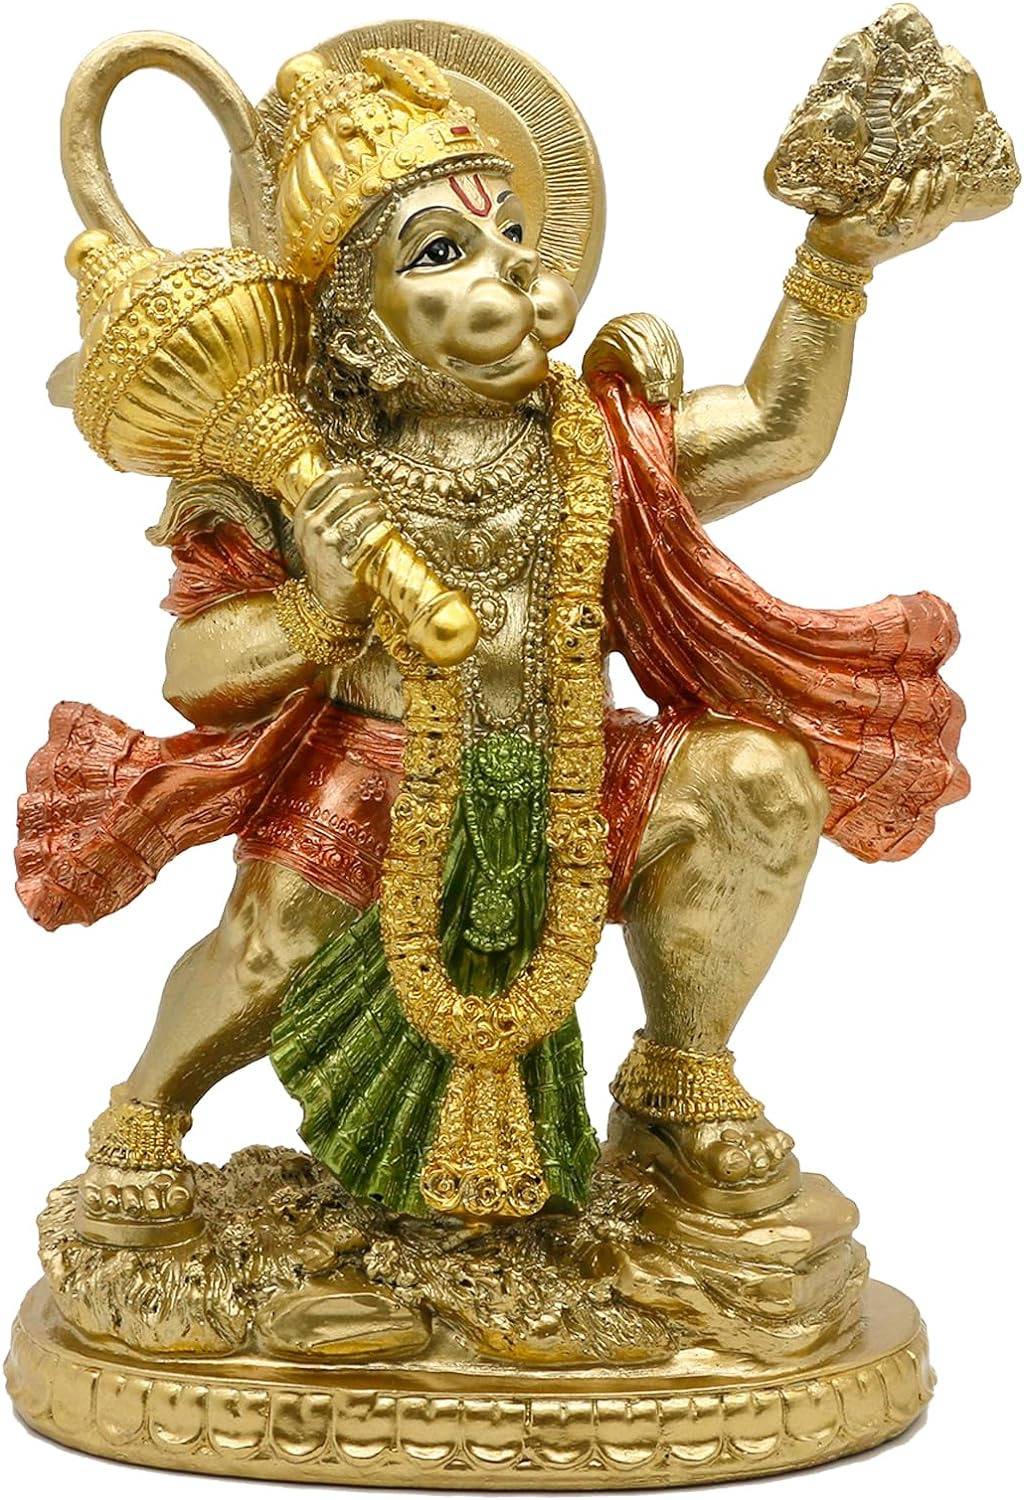 Hindu God Flying Hanuman Statue - India Idol Murti Pooja Sculpture Home Temple M